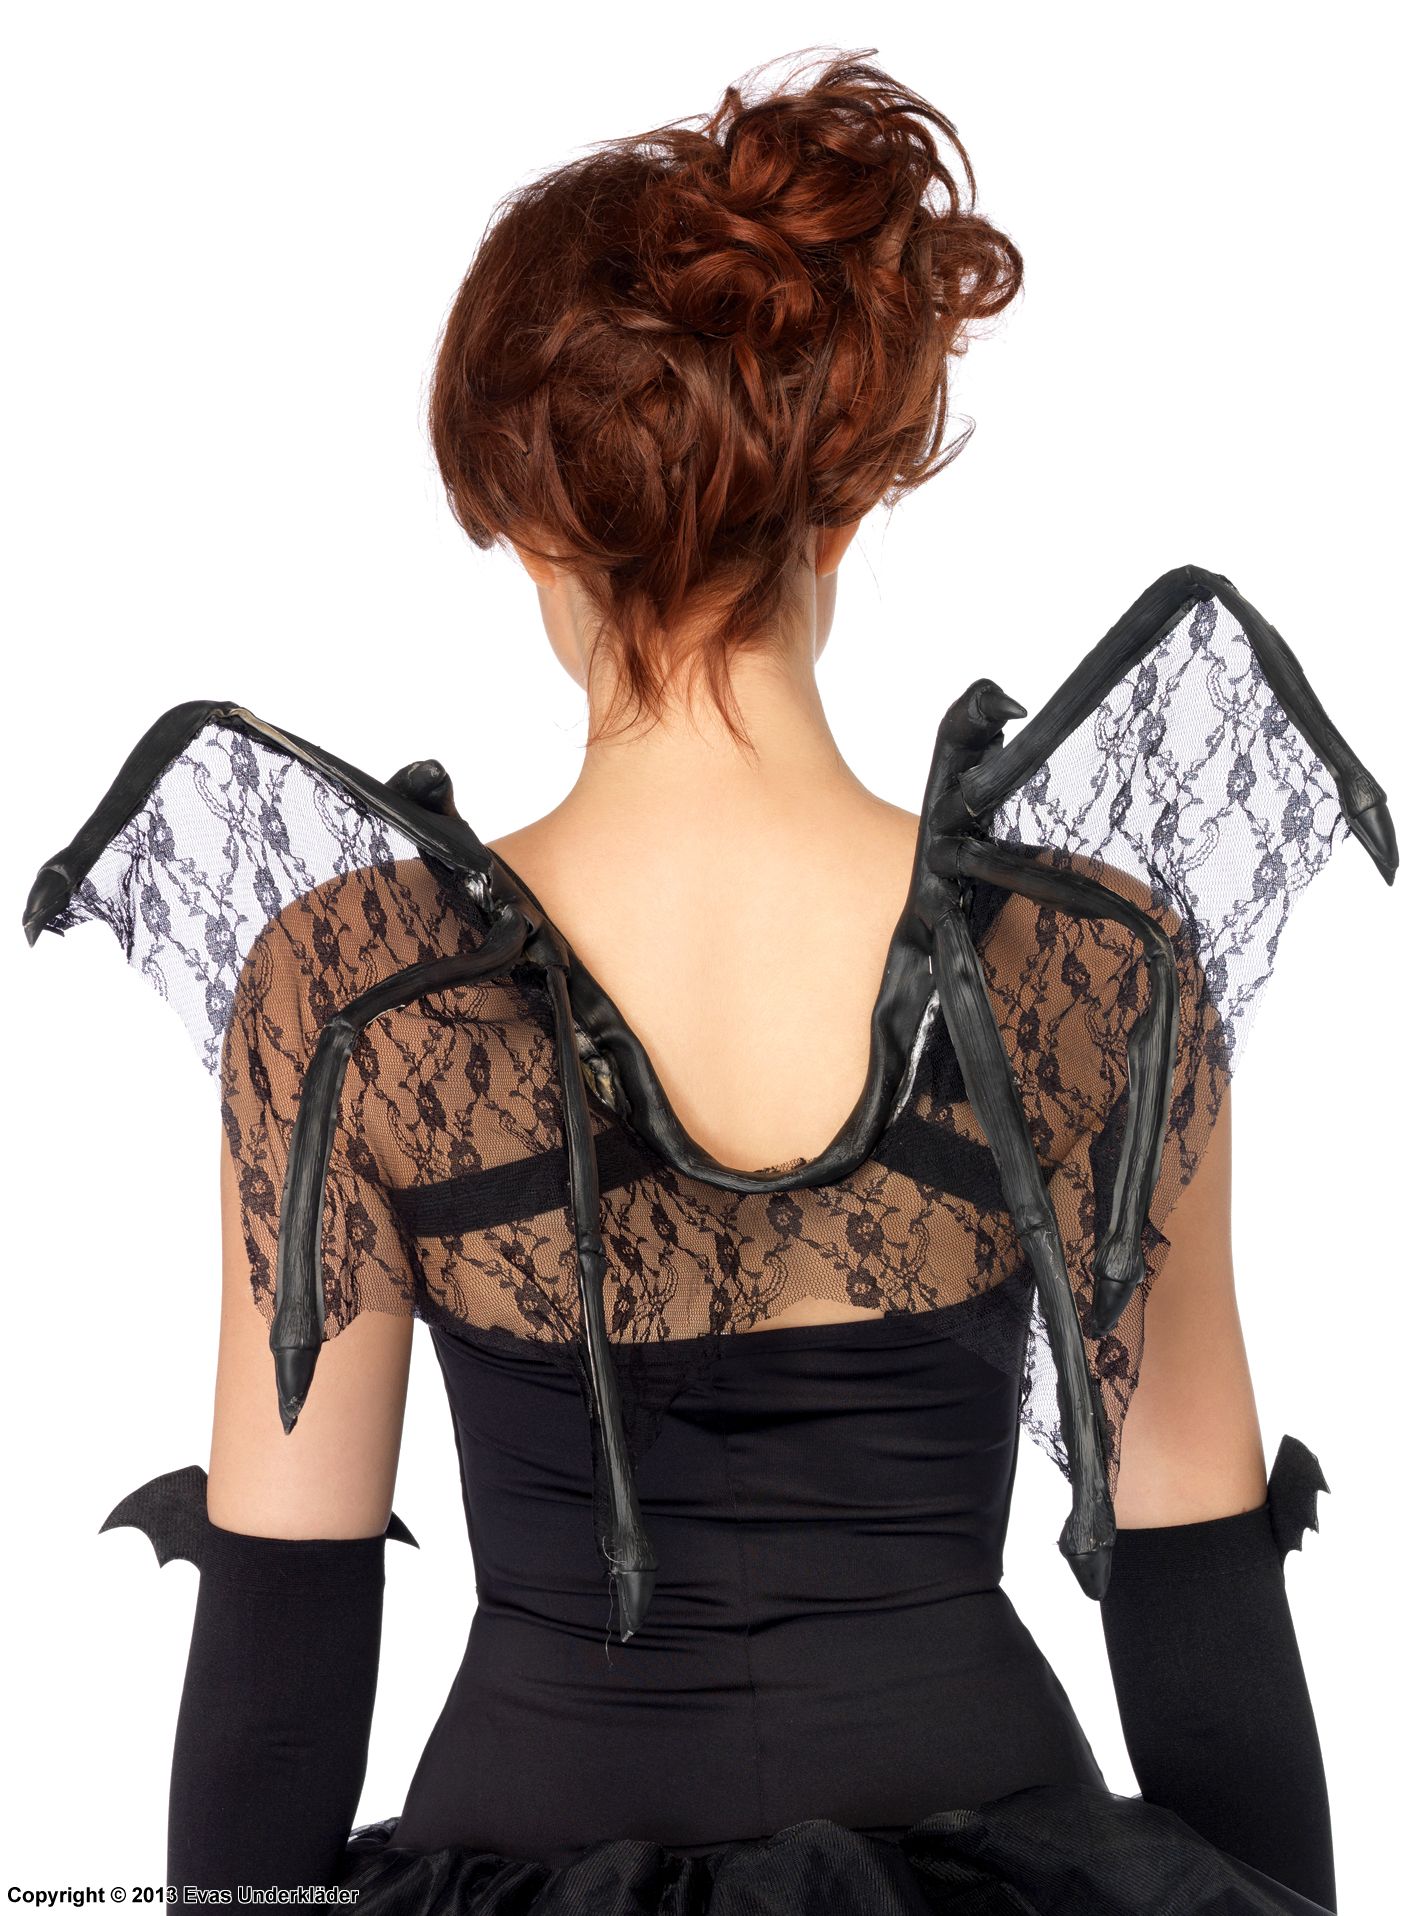 Wing, costume